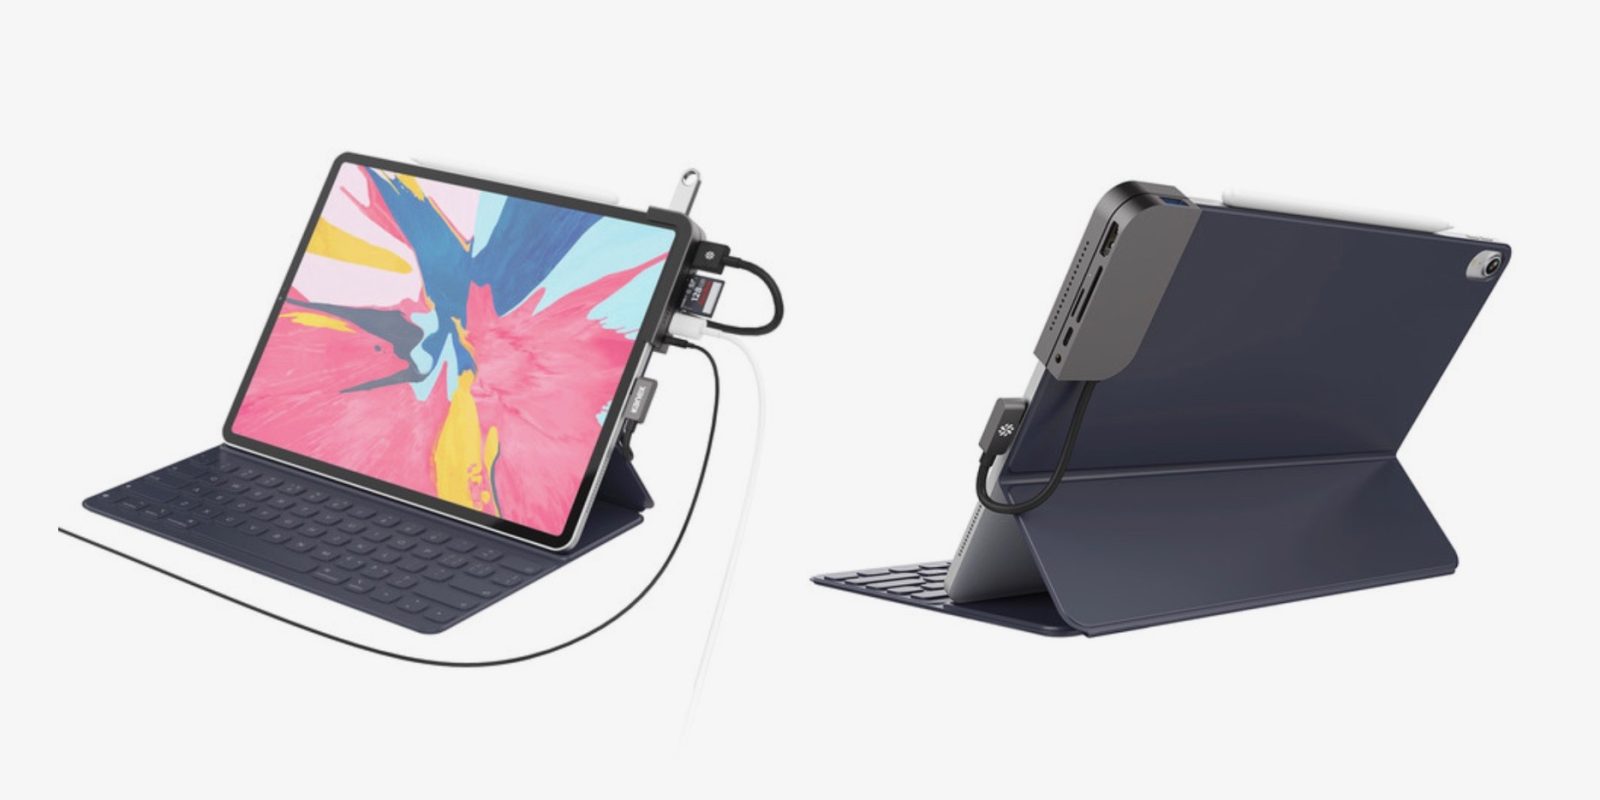 6-in-1 iPad Pro dock USB-C